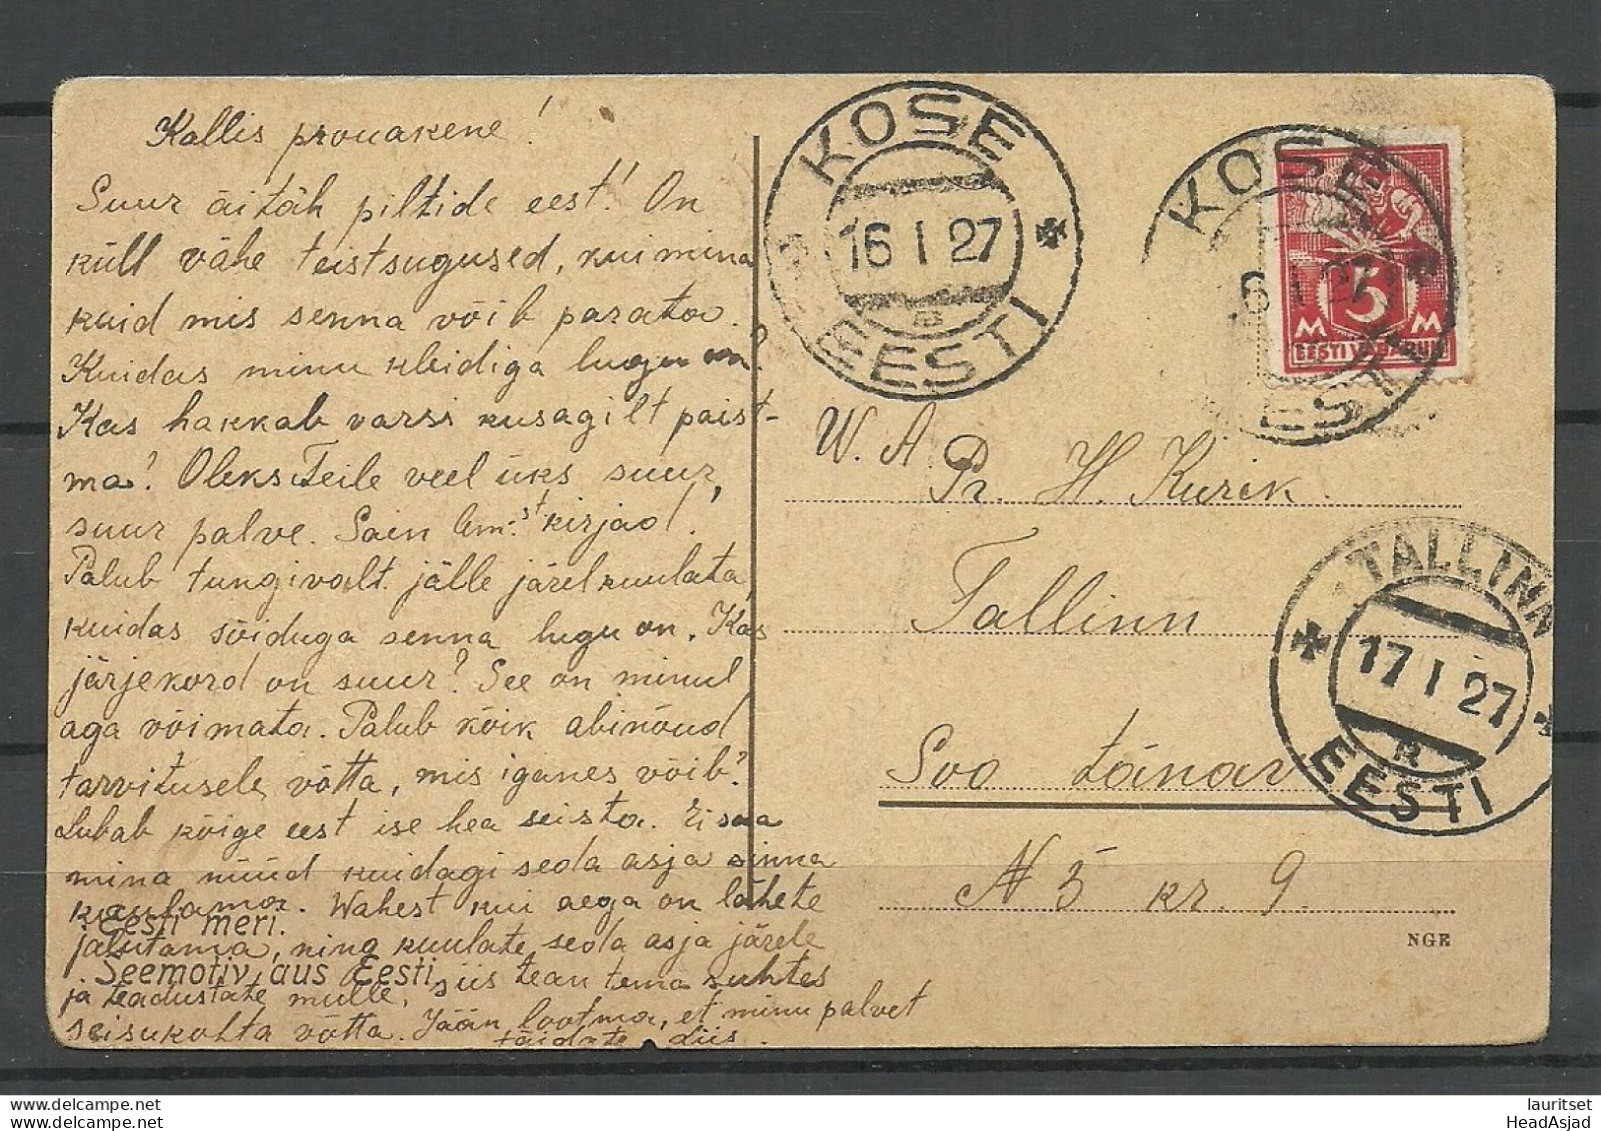 ESTONIA Estland 1927 O KOSE Photo Post Card Seemotiv Parikas Michel 37 A Thin Paper Type As Single - Estonie